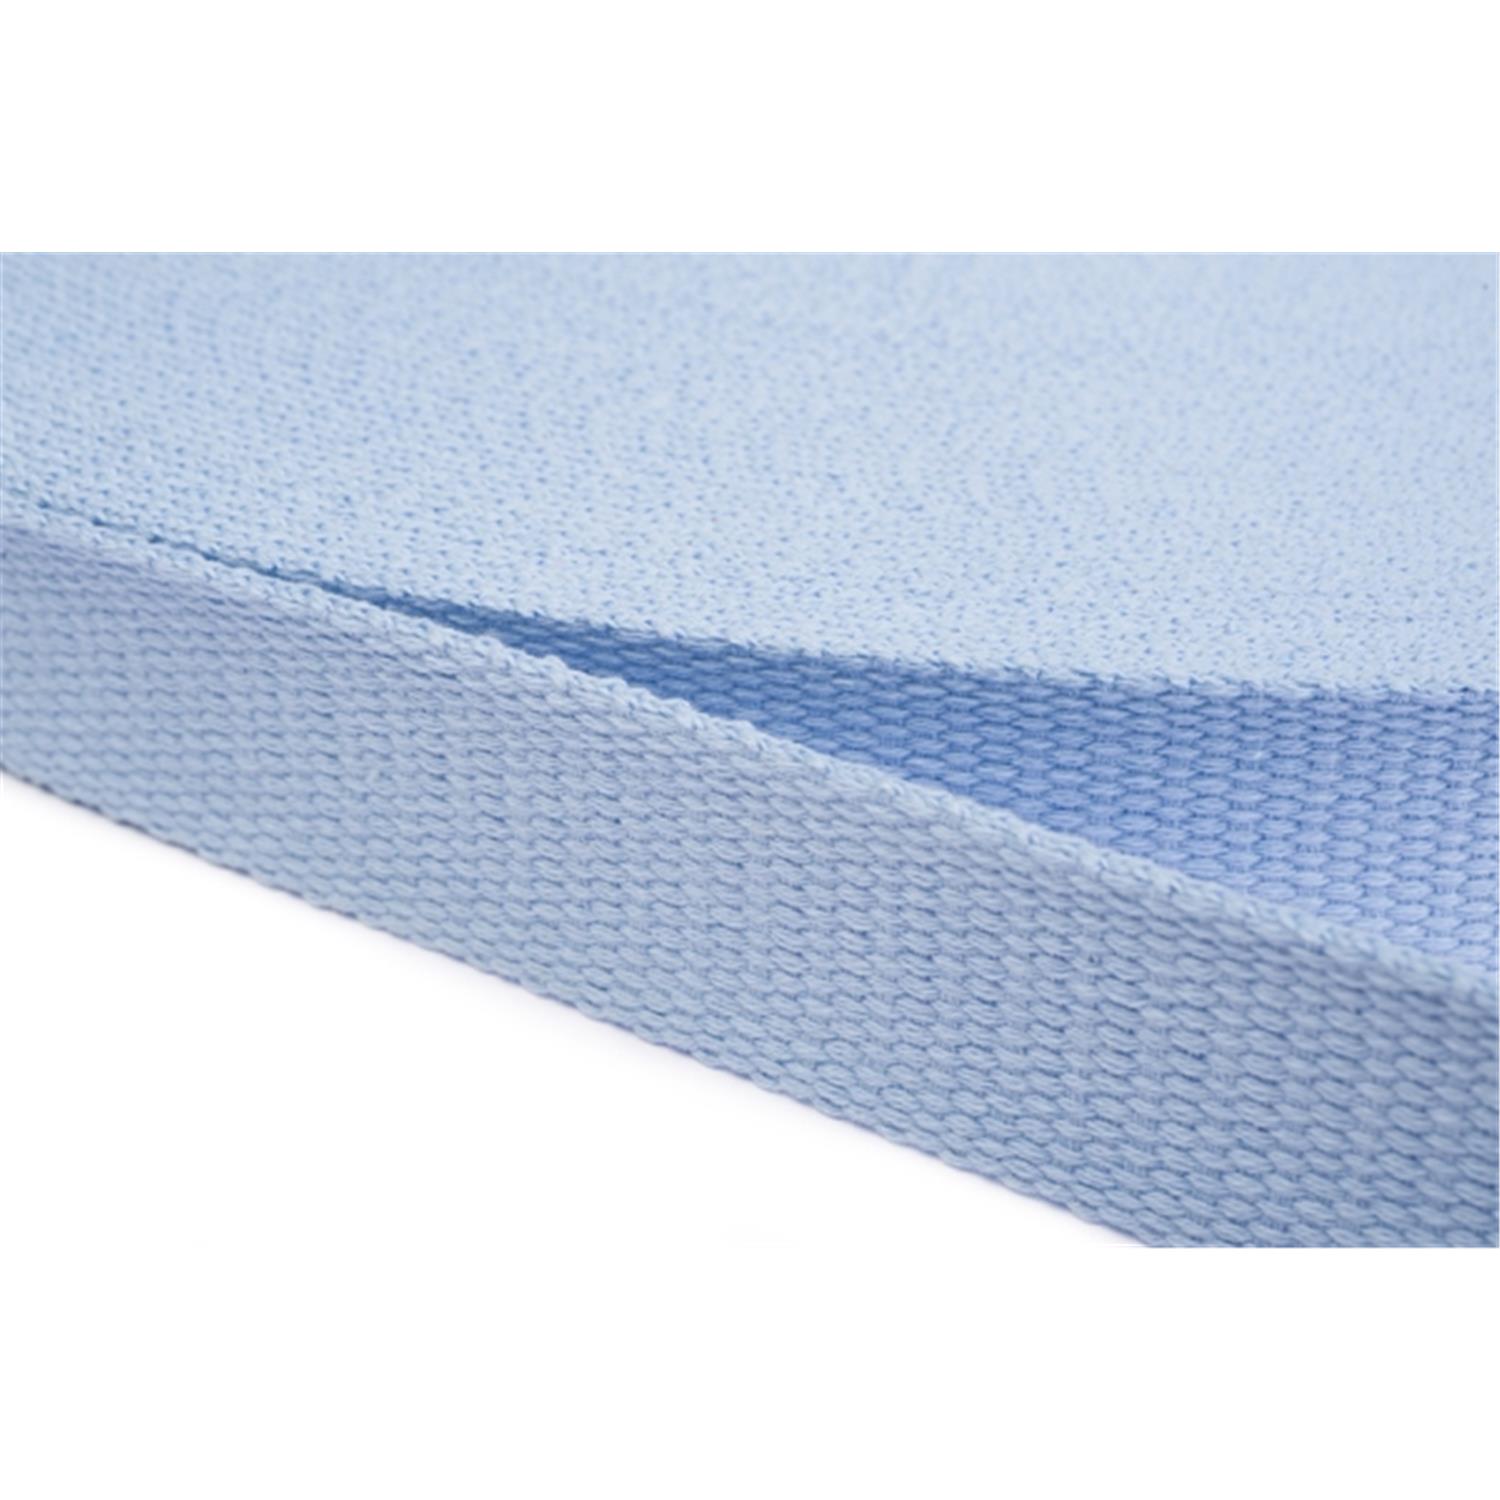 Gurtband aus Baumwolle 40mm in 20 Farben 11 - hellblau 6 Meter